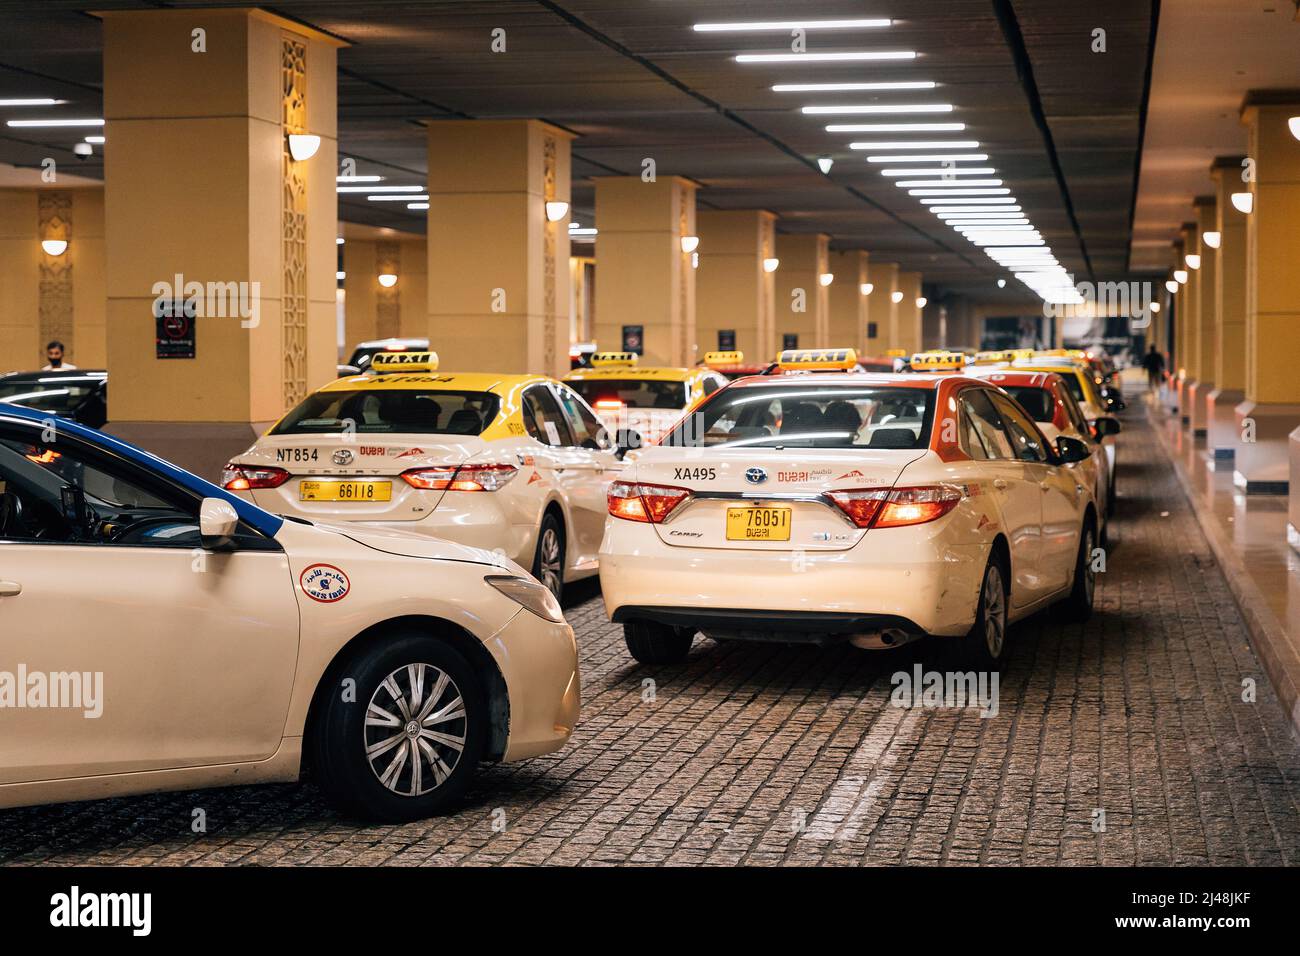 Dubai, UAE, United Arab Emirates - May 22, 2021: Taxi cars parking at the Dubai mall. Taxi parking at the shopping center, shopping mall. Traffic on Stock Photo